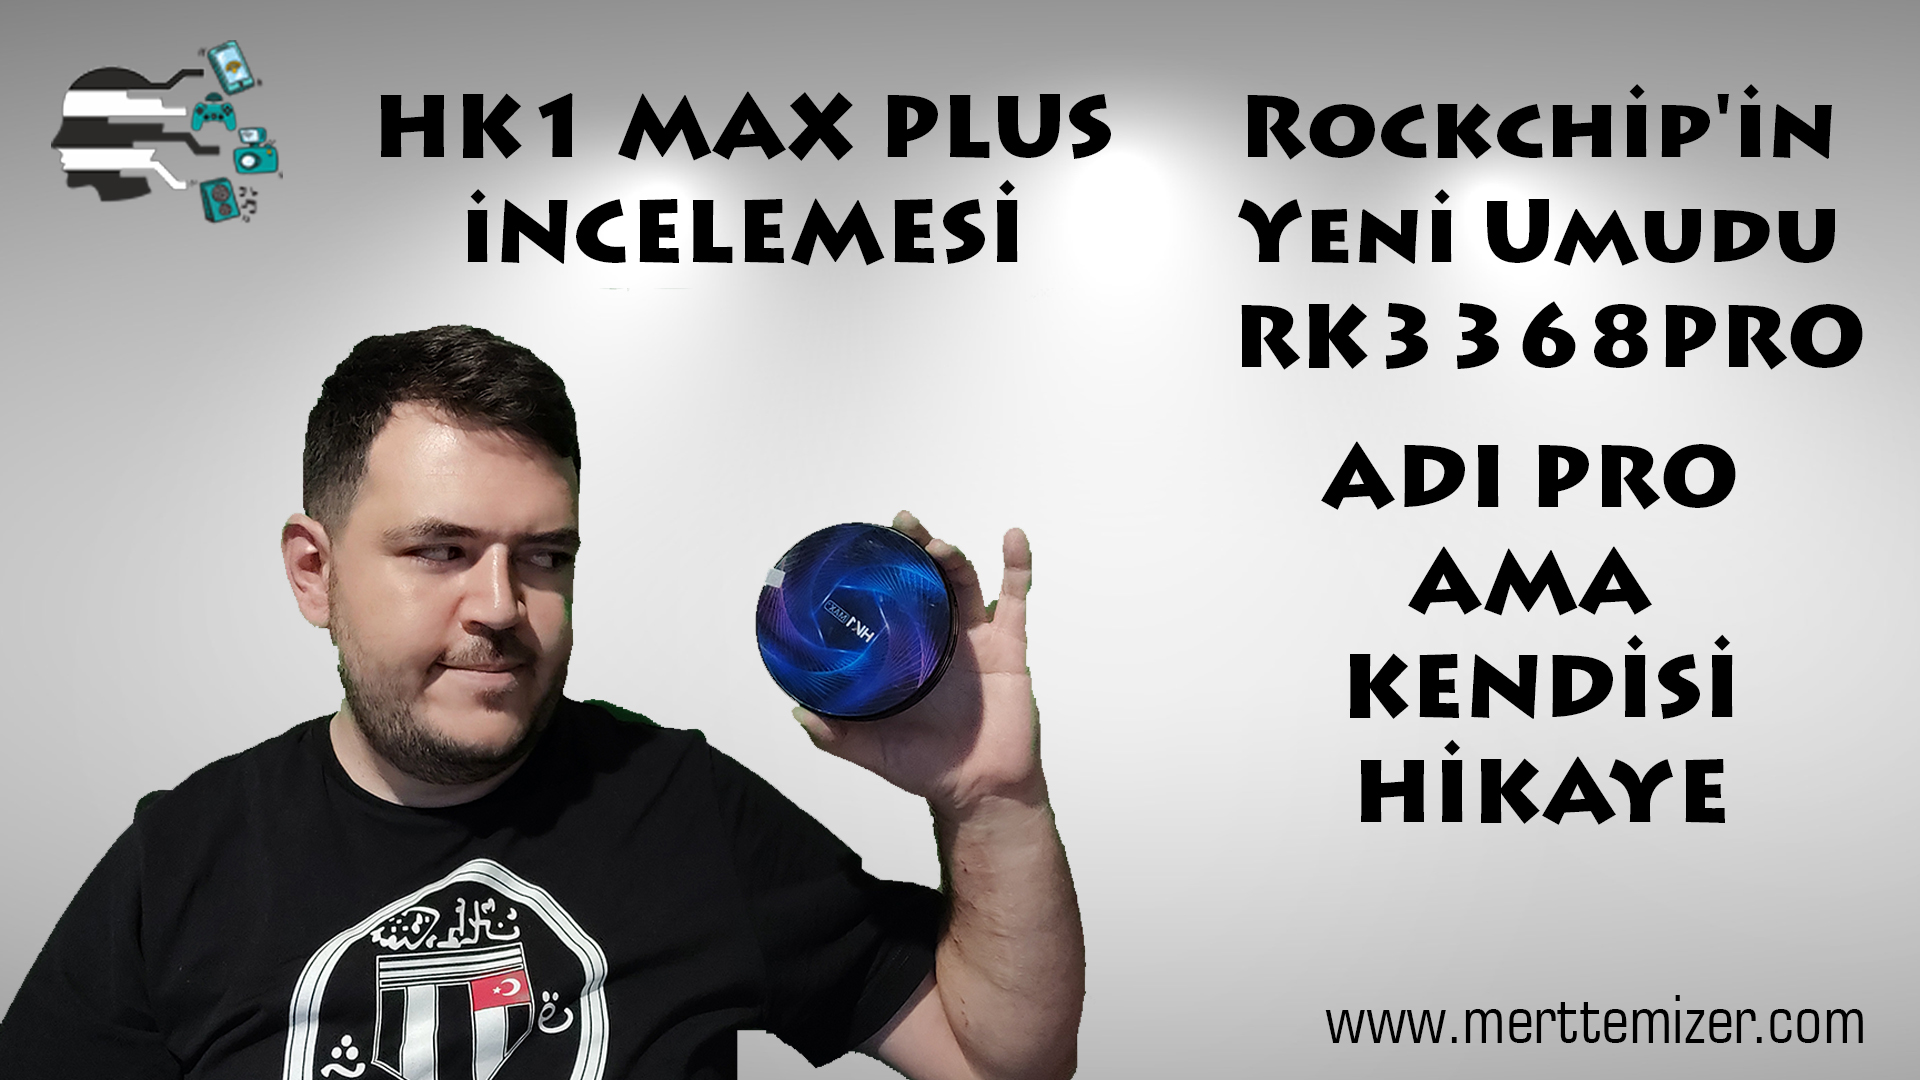 Rockchip’in Yeni Umudu RK3368PRO – HK1 Max Plus İncelemesi